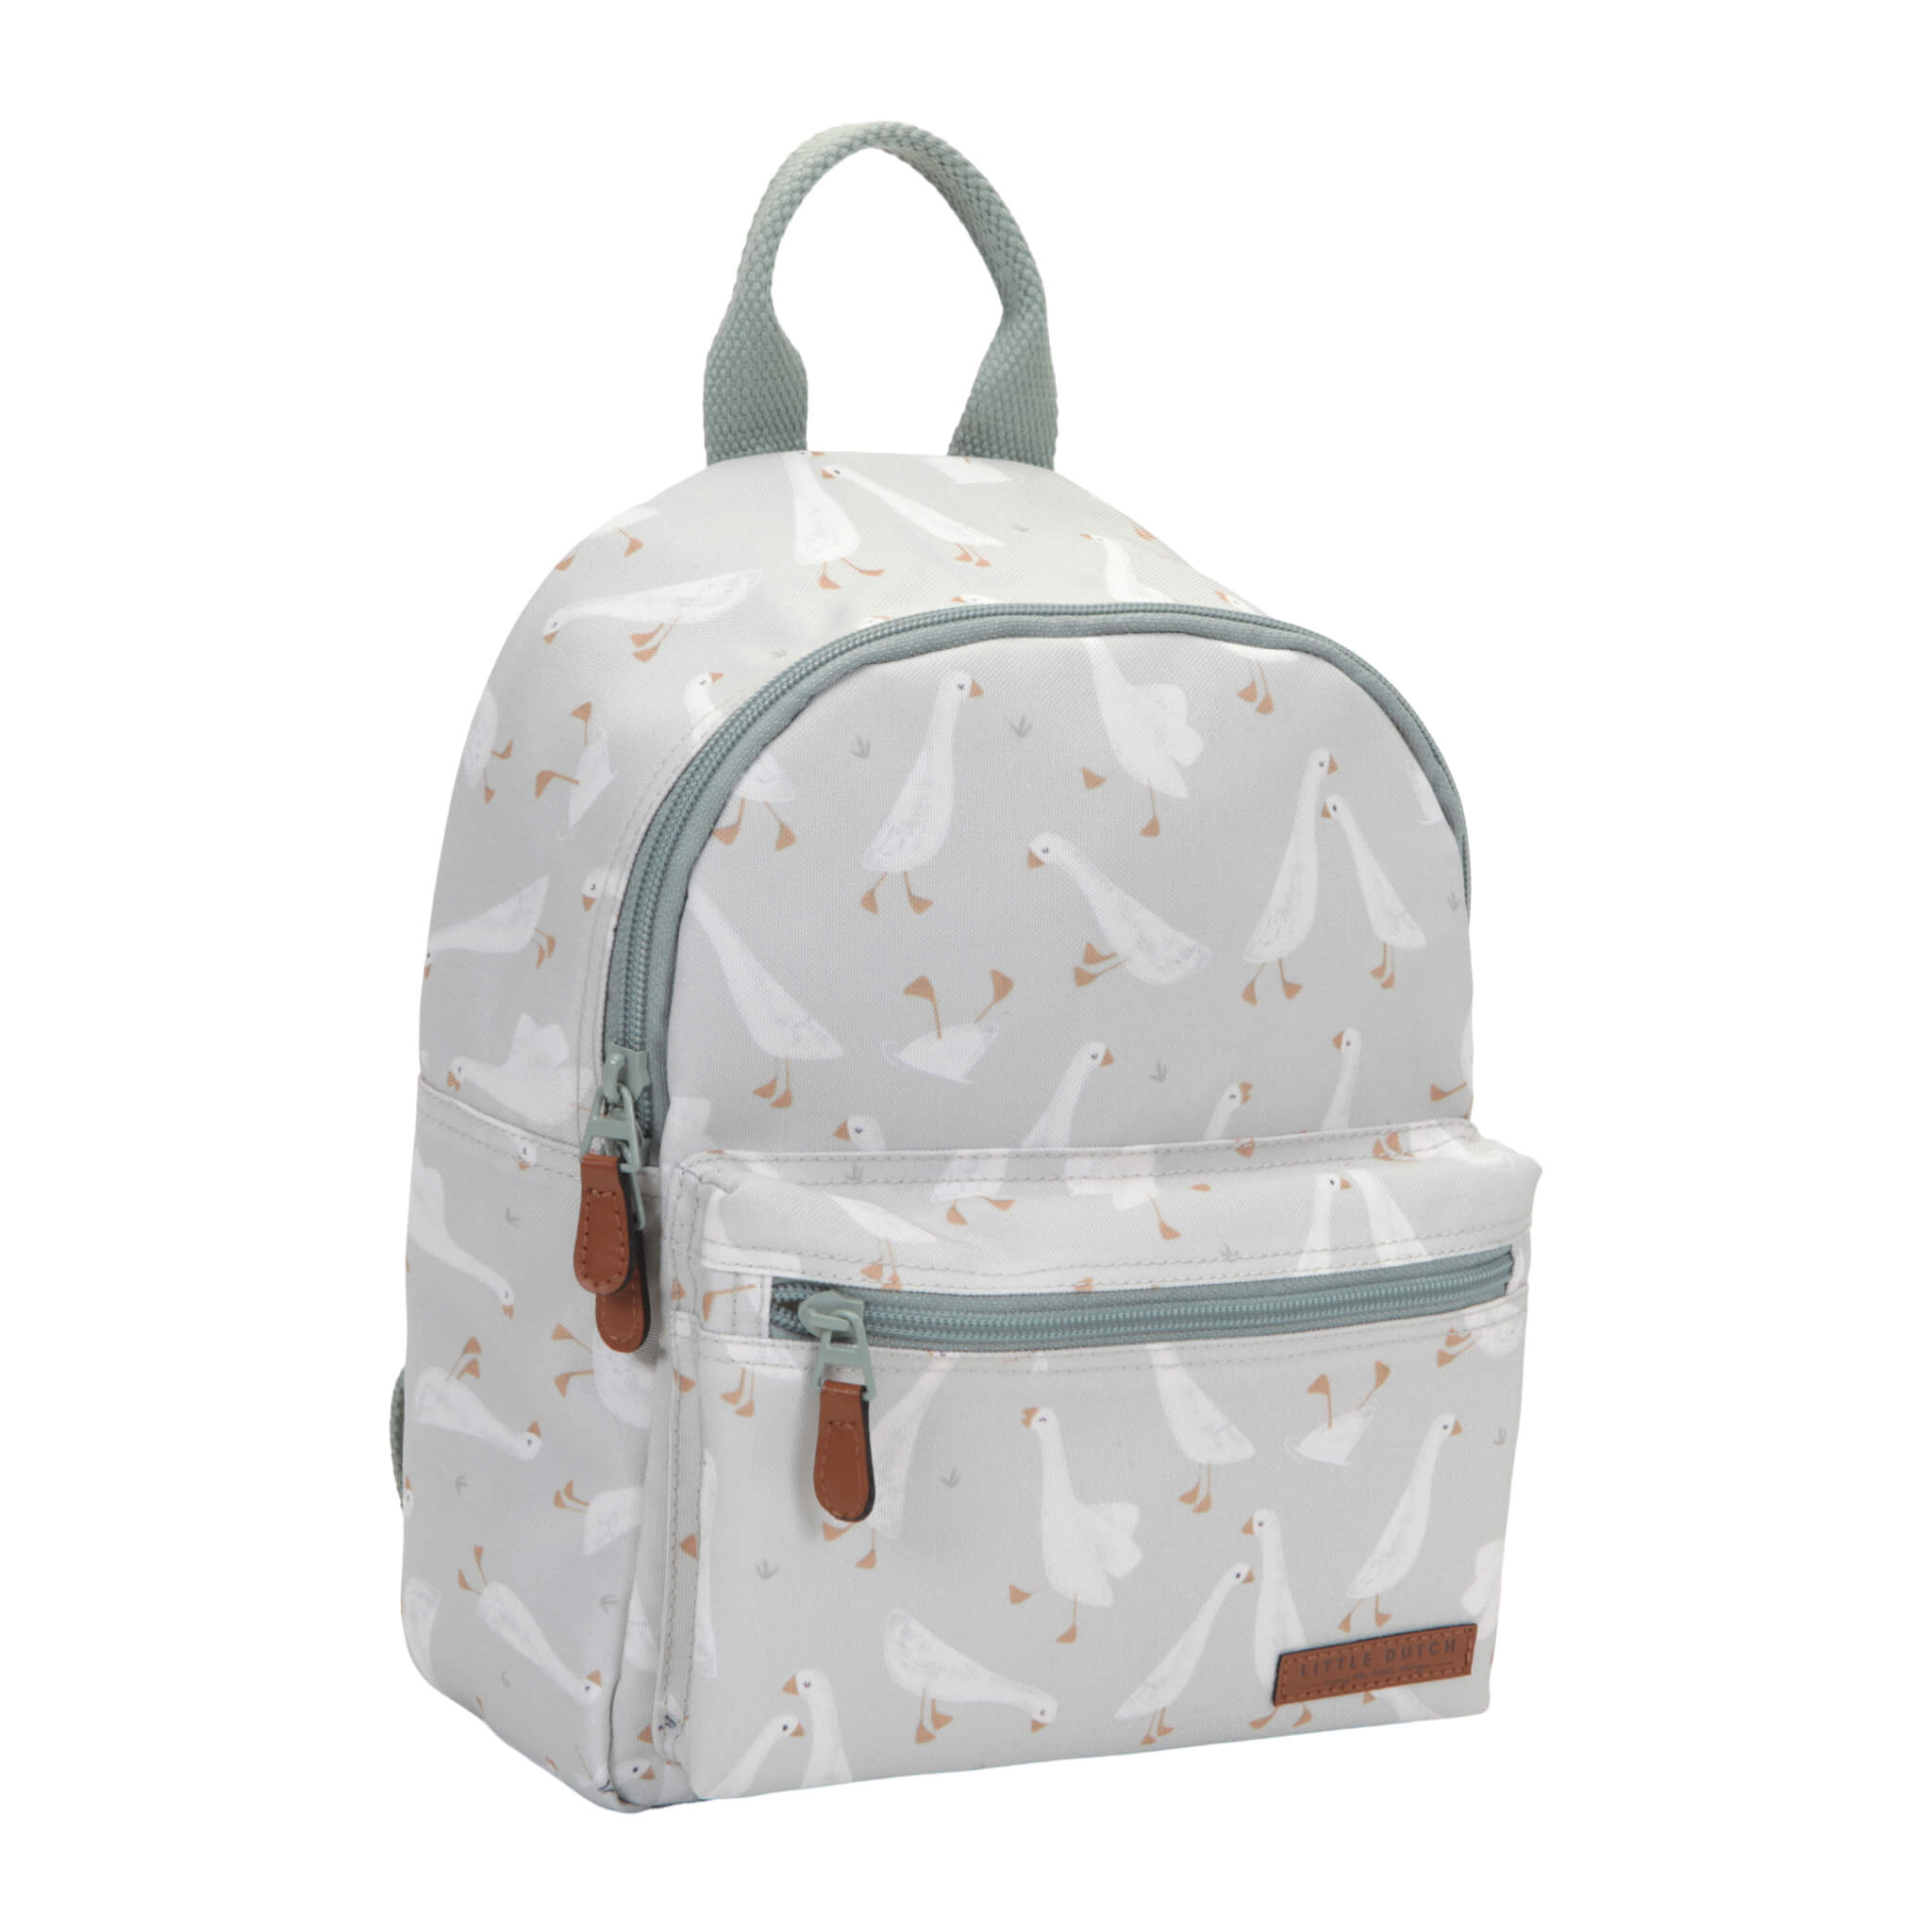 Little Dutch Backpack in Little Goose Design